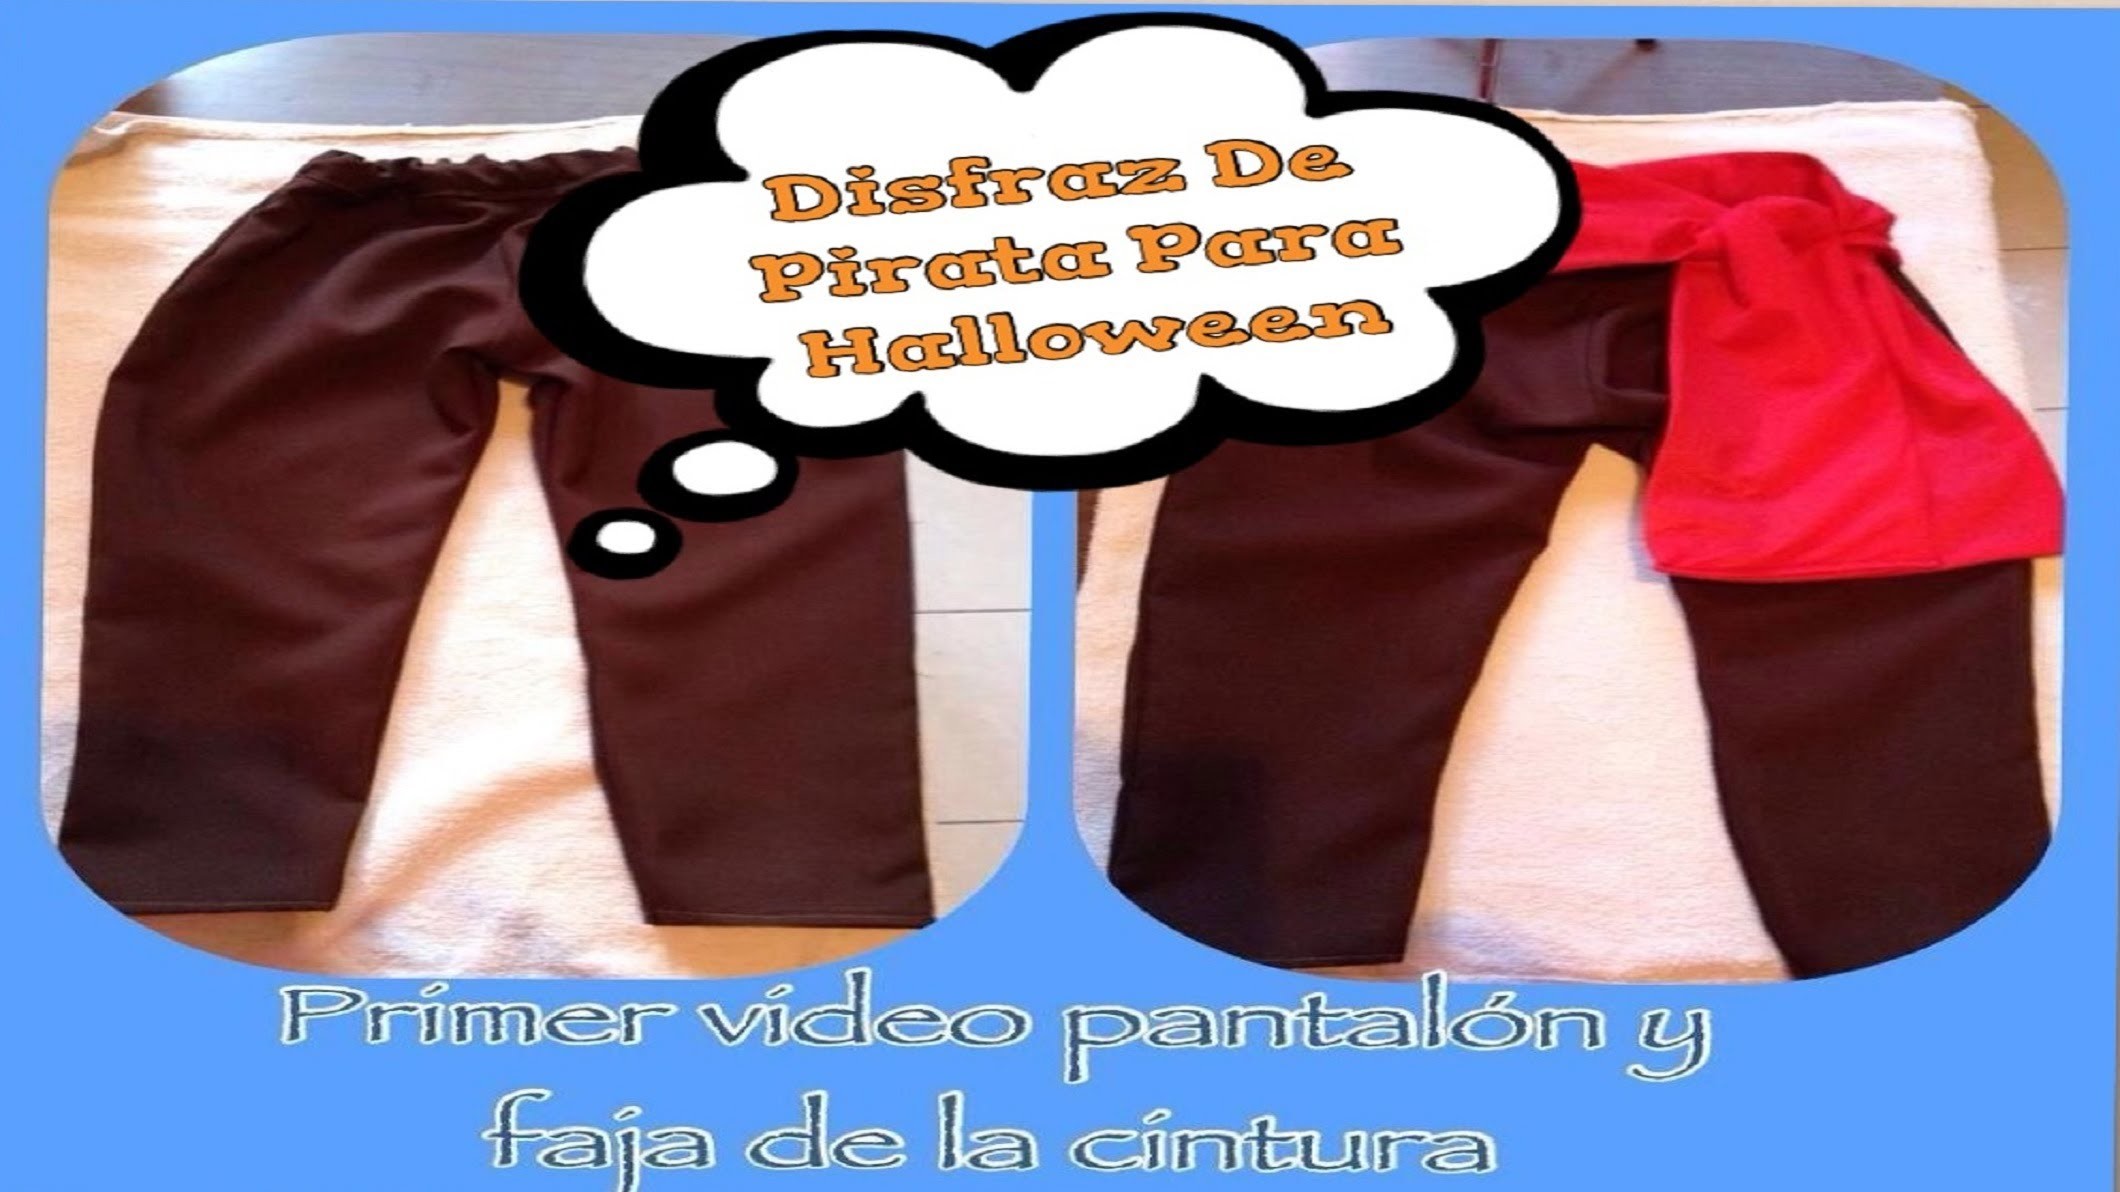 Elaborando Disfraz De Halloween (( Disfraz De Pirata )) - Pantalon y Faja De La Cintura -